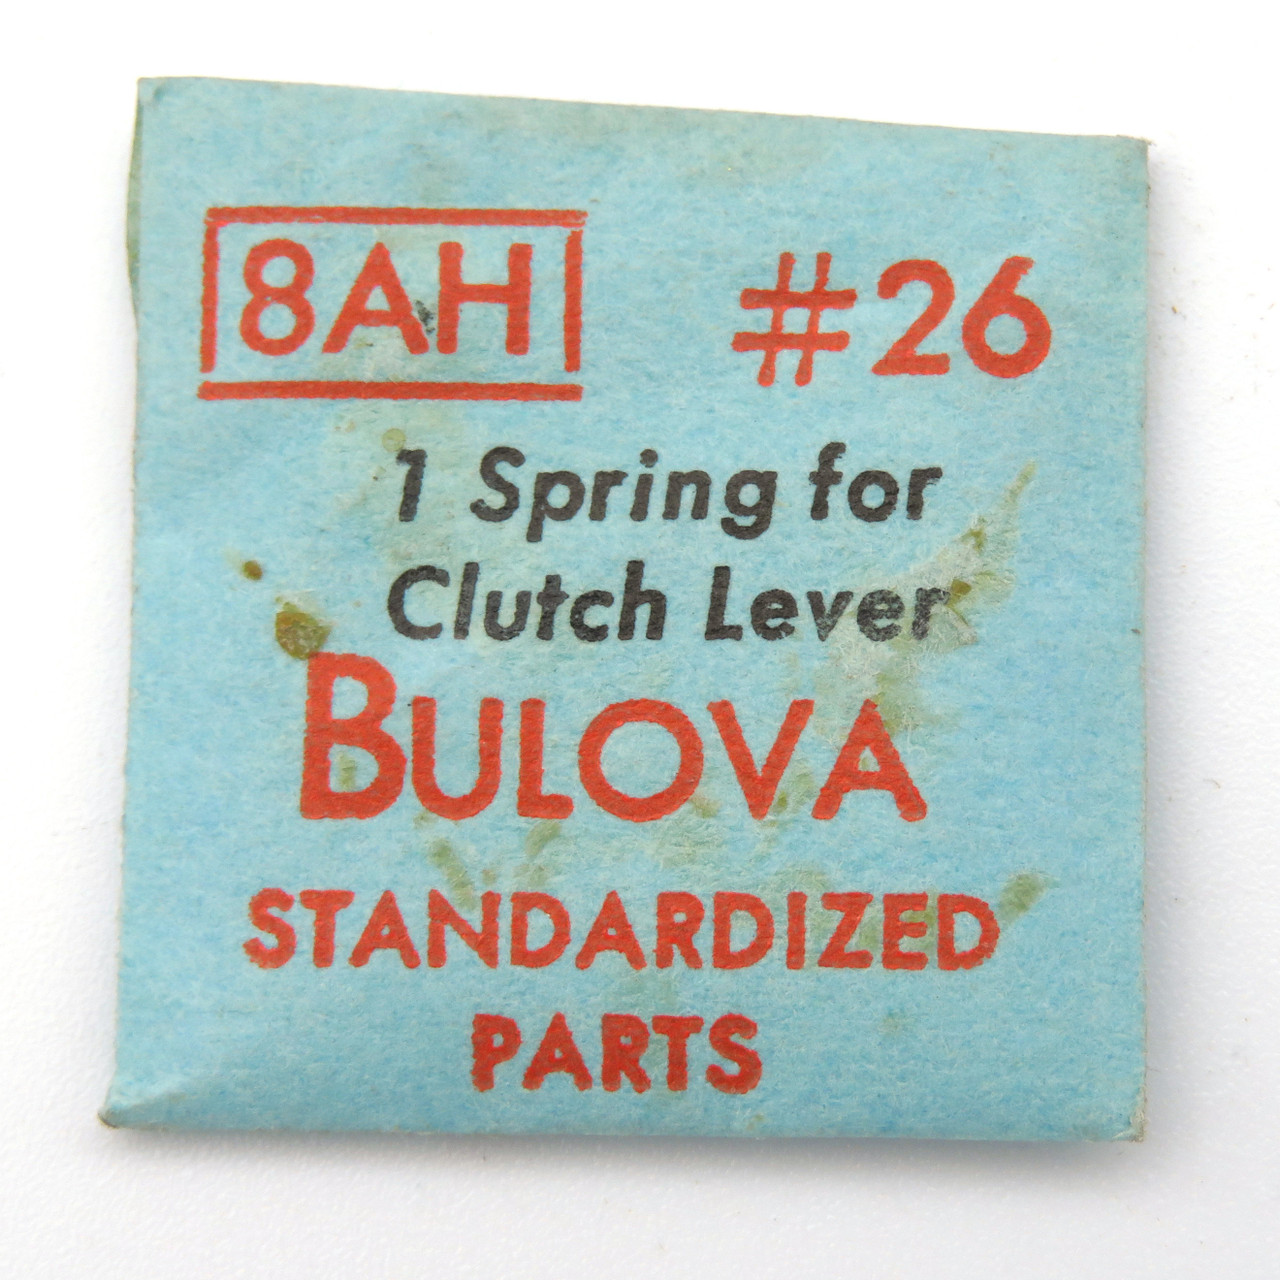 Bulova 8AH Spring For Clutch Lever Part # 26